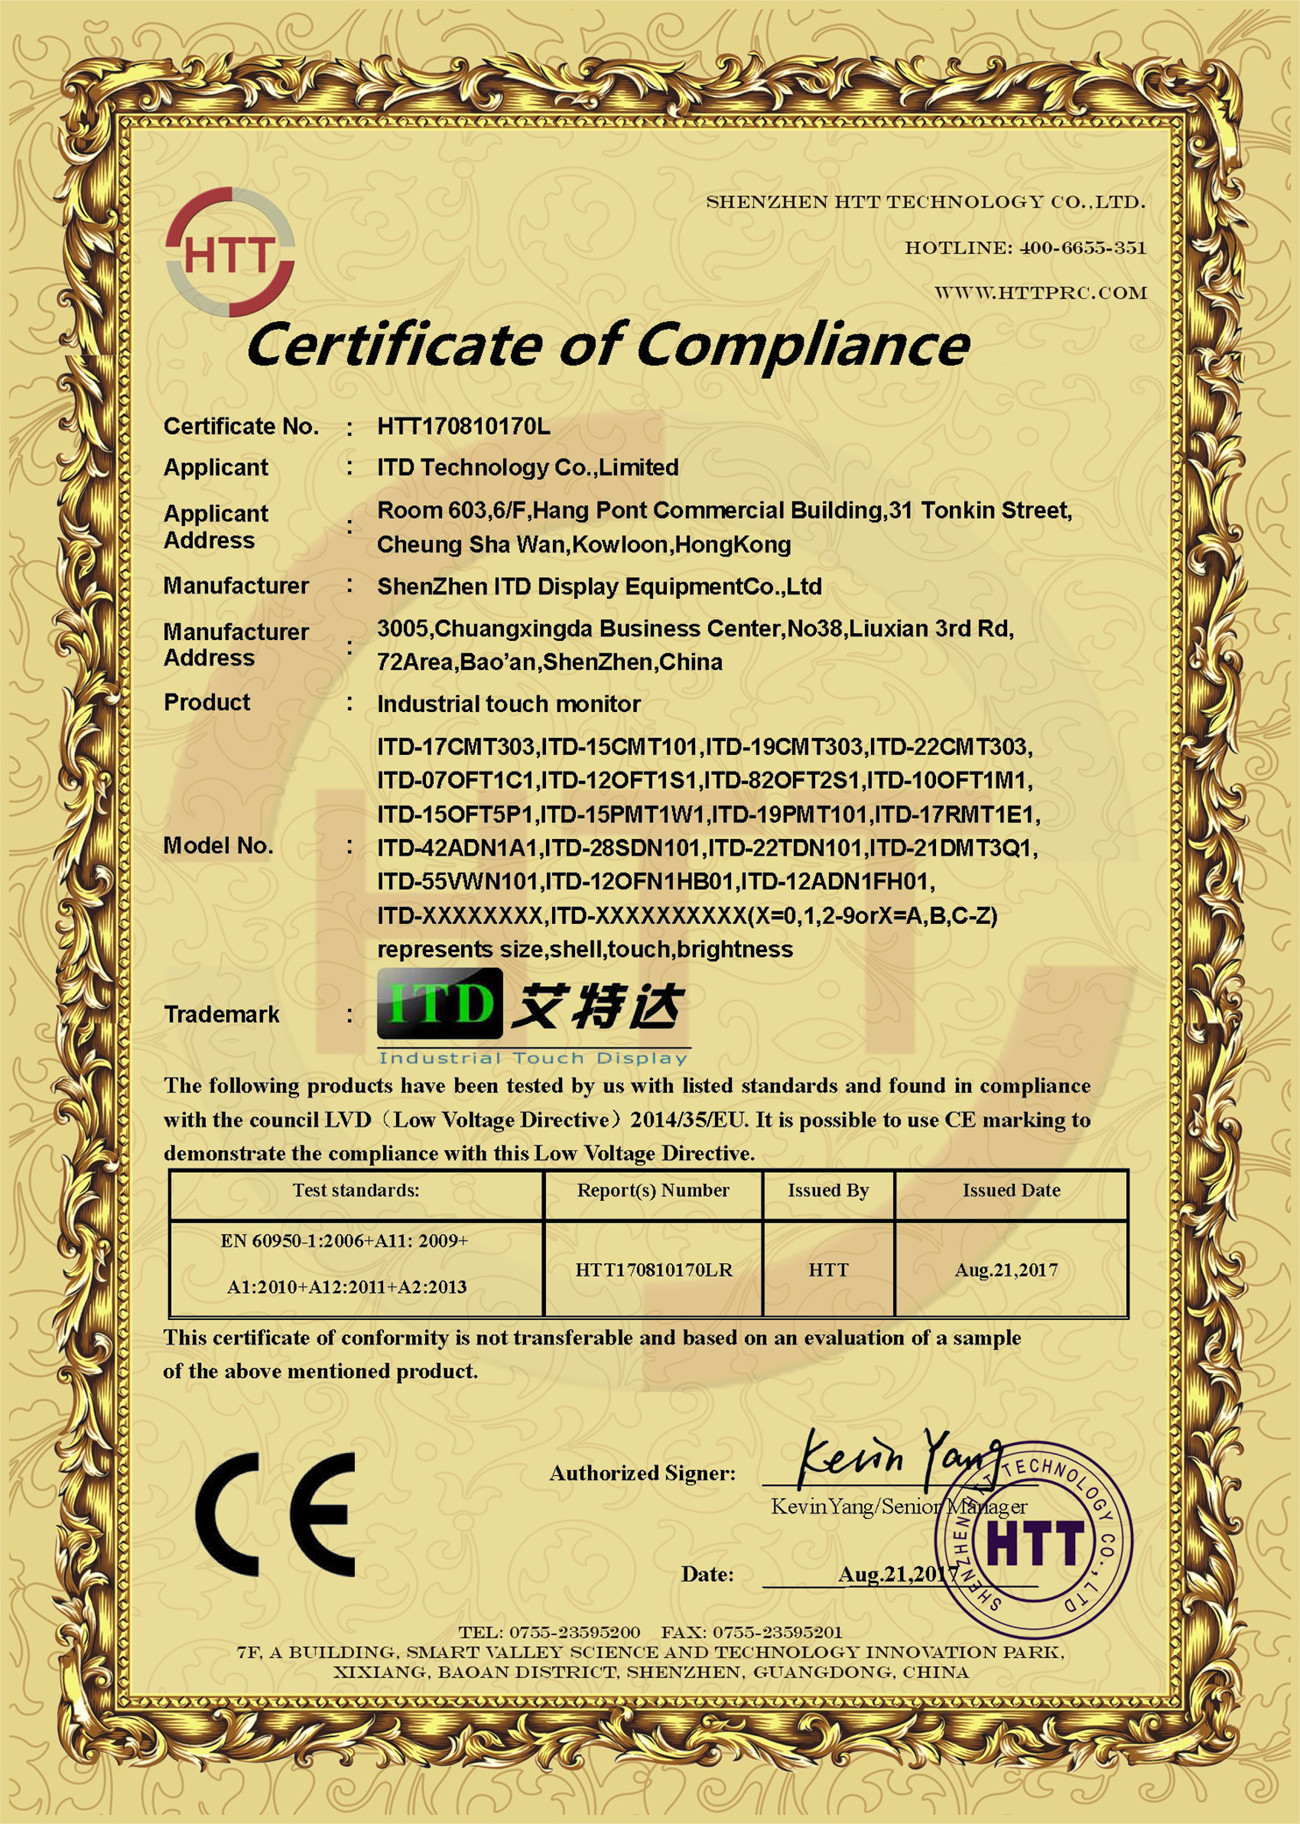 Shenzhen ITD Display Equipment Co., Ltd. Certifications